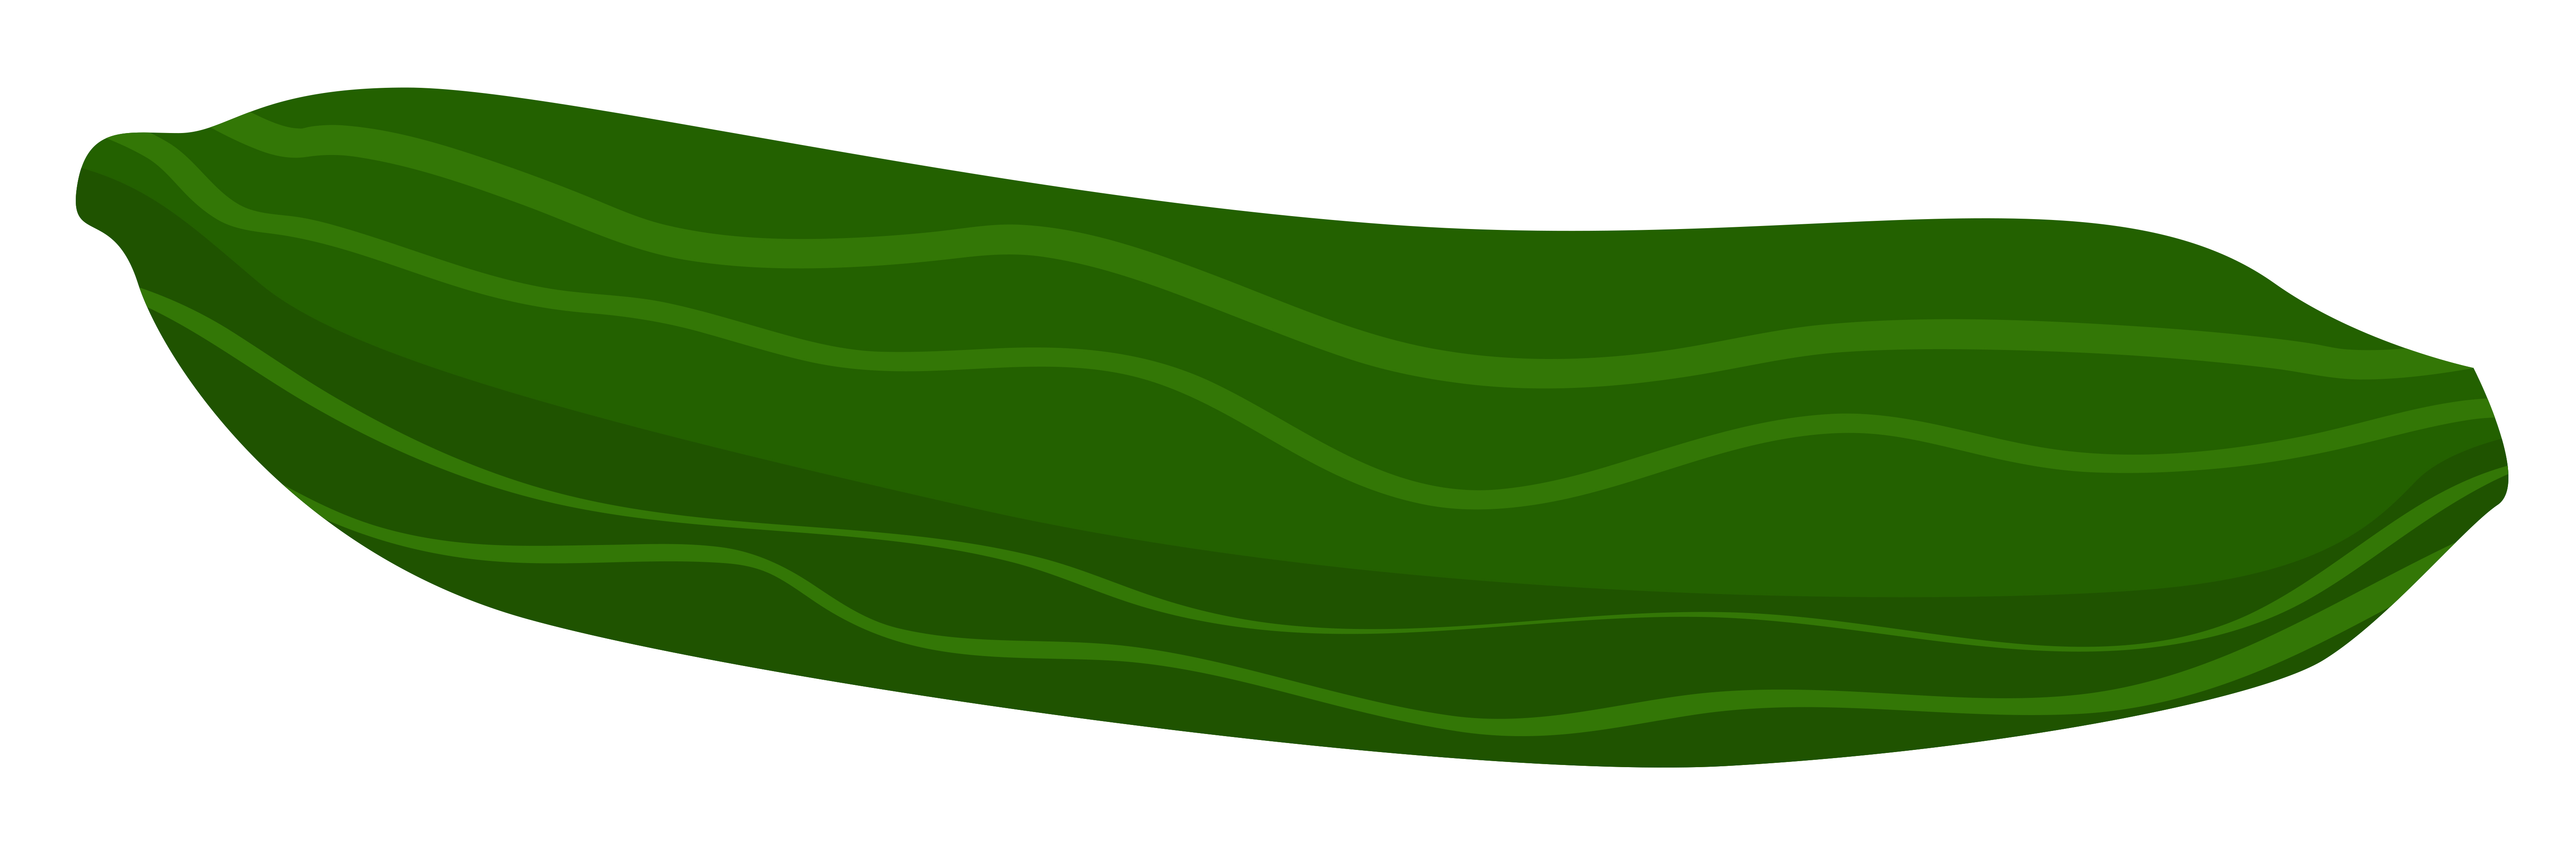 Cucumber clipart kiaavto imag - Cucumber Clip Art